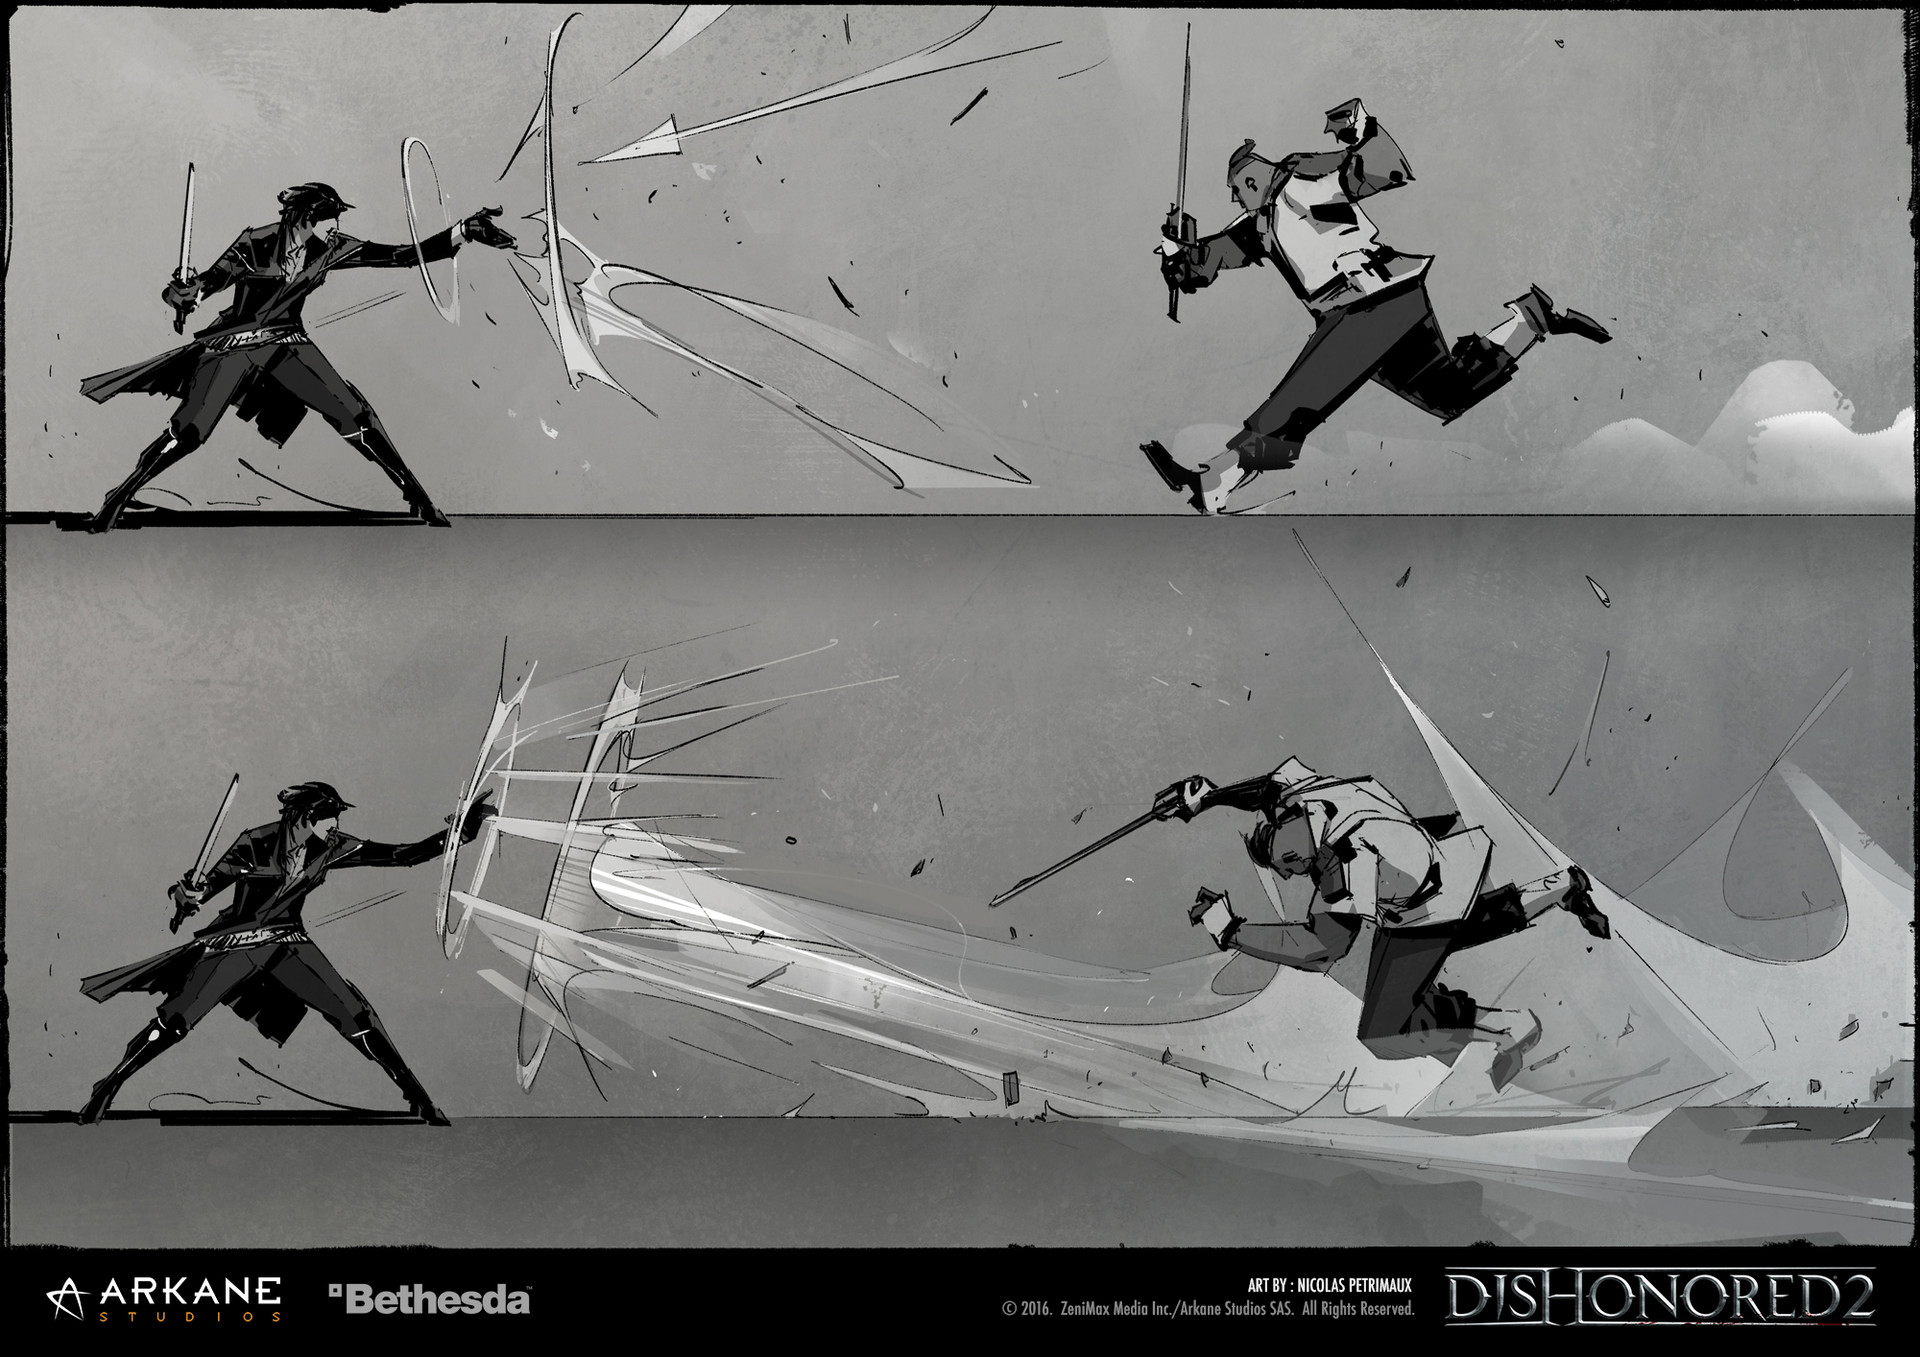 Fine Art: Dishonored 2’s Kills, Illustrated